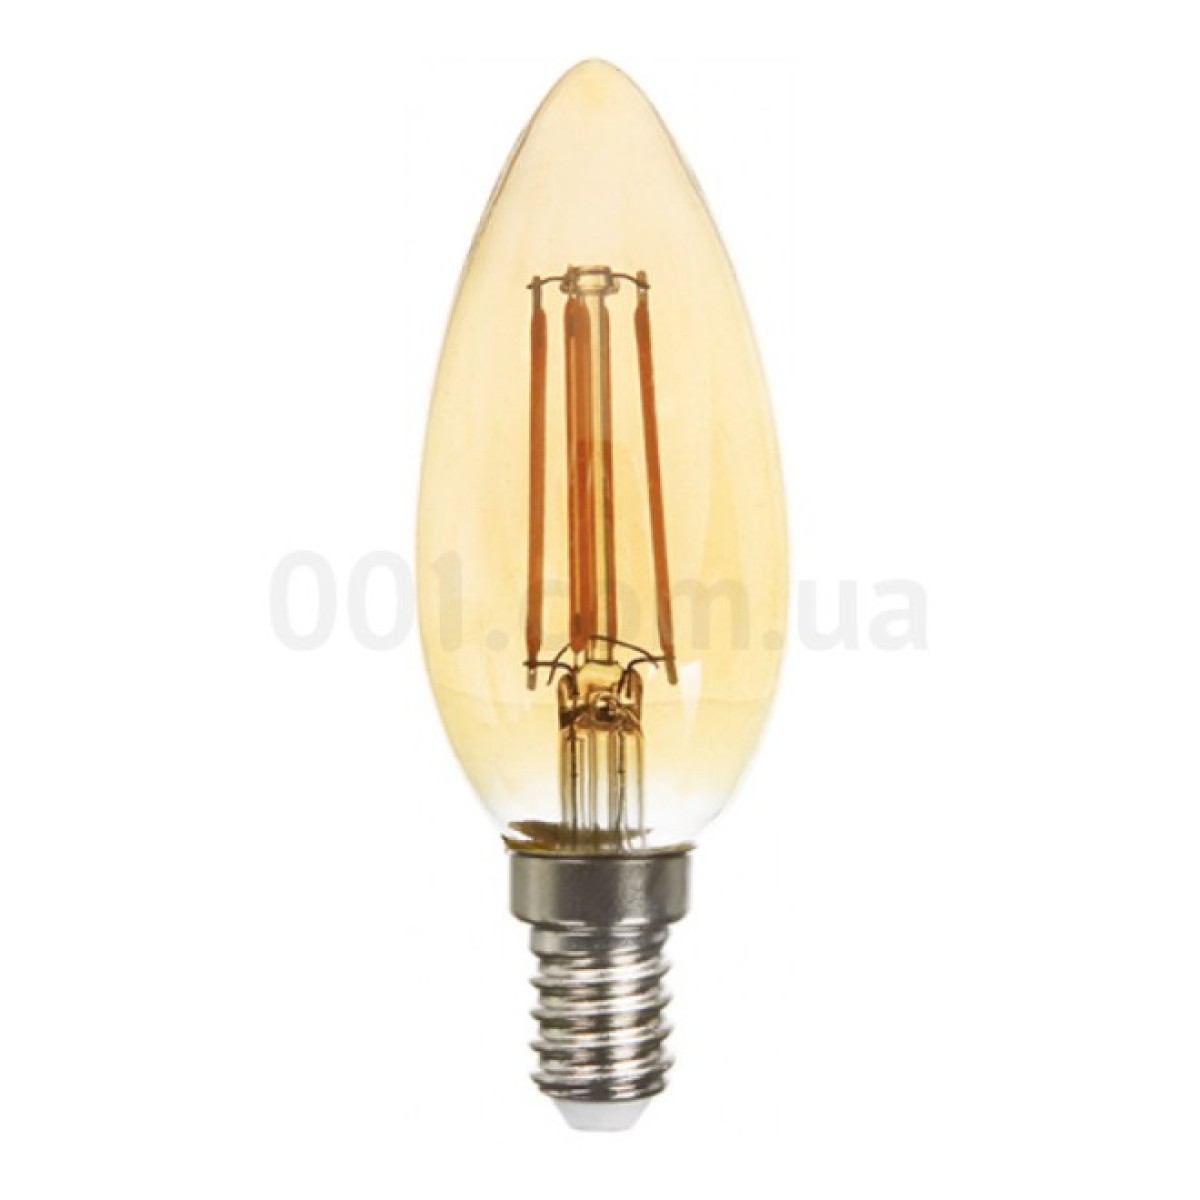 Светодиодная лампа LB-158 C37 (свеча) филамент золото 6Вт 2200K E14, Feron 256_256.jpg